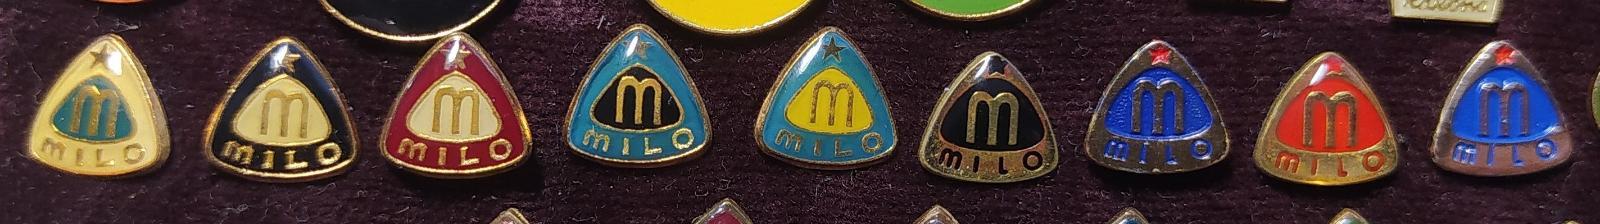 P184 Odznak MILO - 9ks